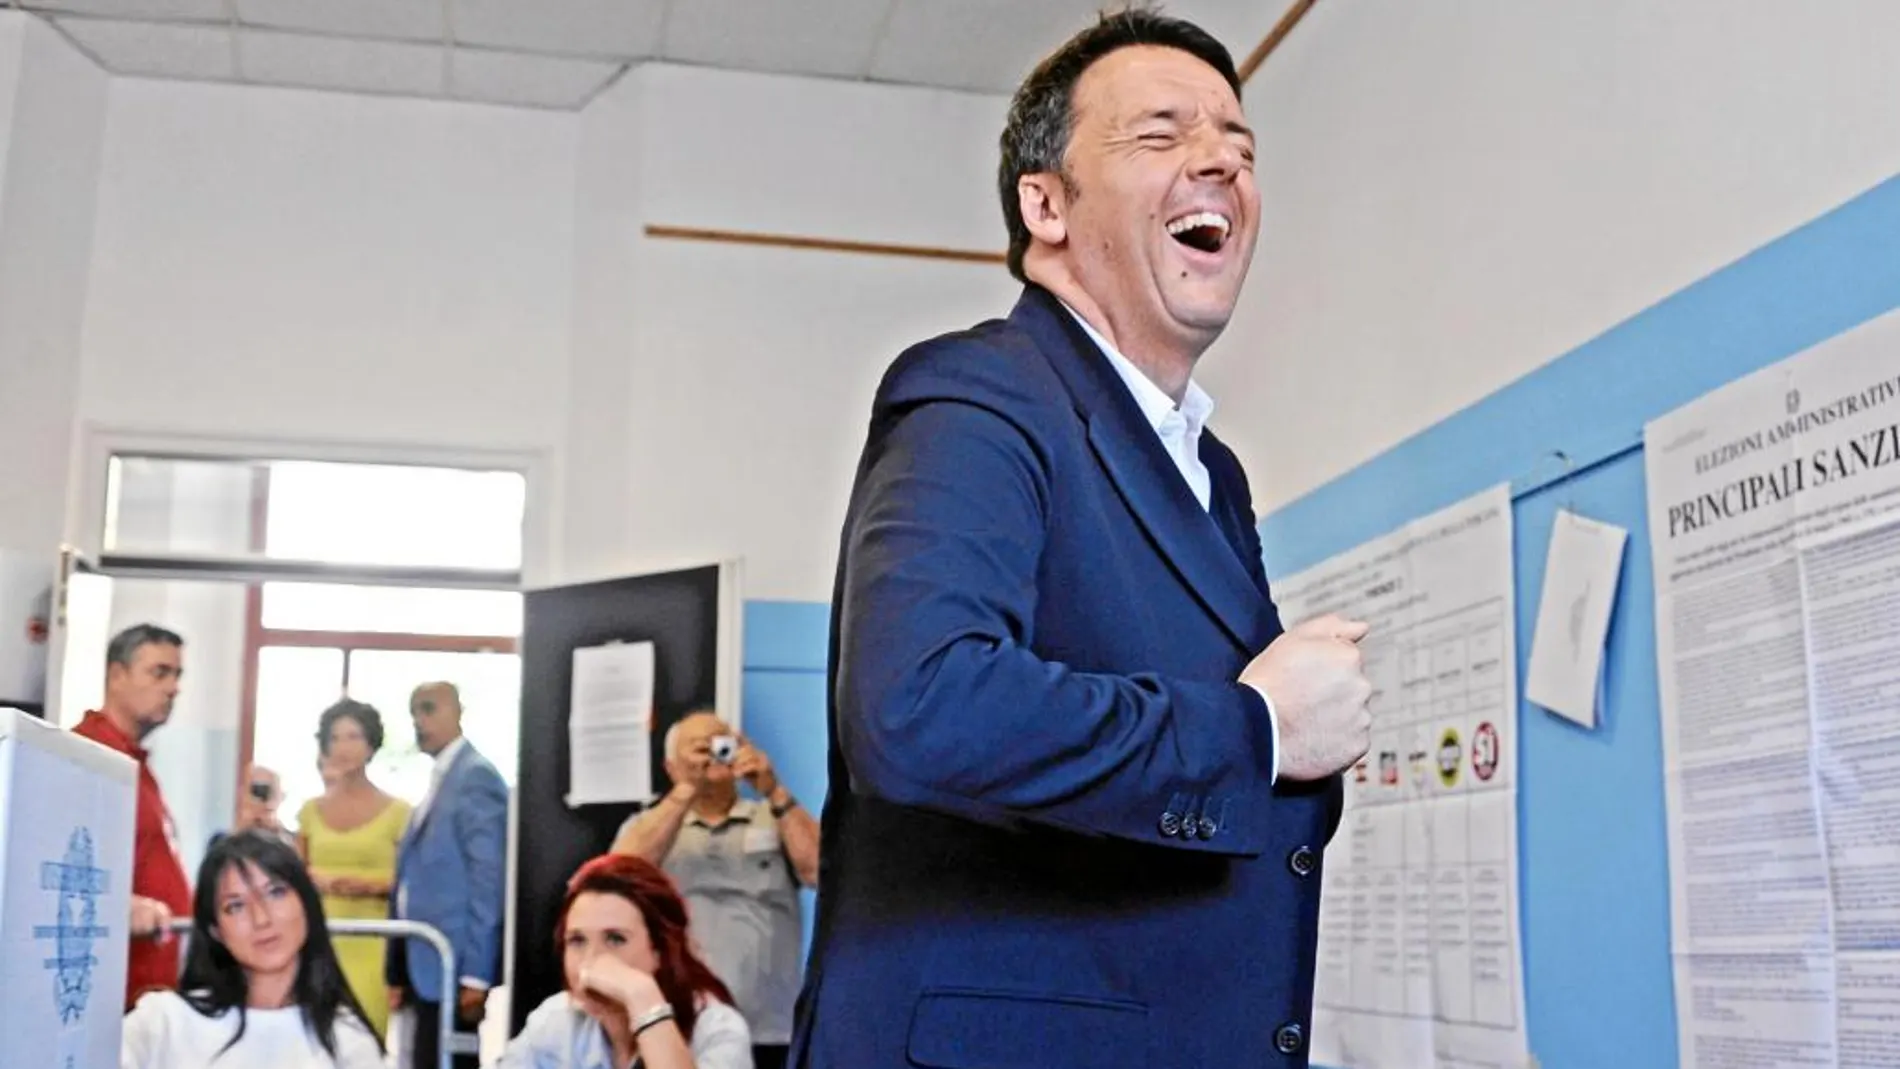 El primer ministro italiano, Matteo Renzi, vota en un colegio cerca de Florencia